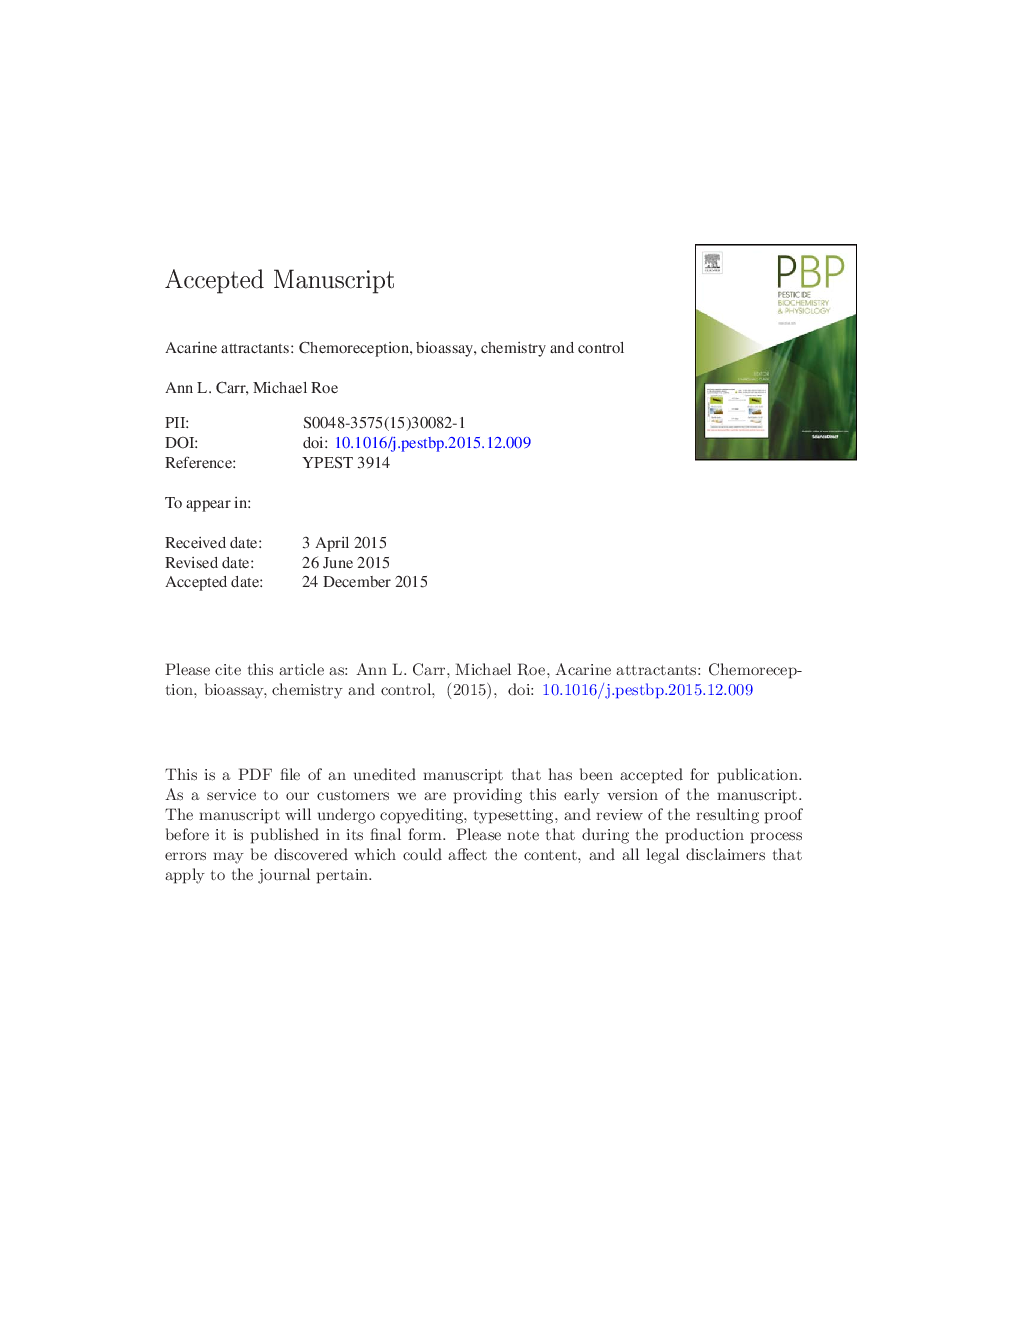 Acarine attractants: Chemoreception, bioassay, chemistry and control